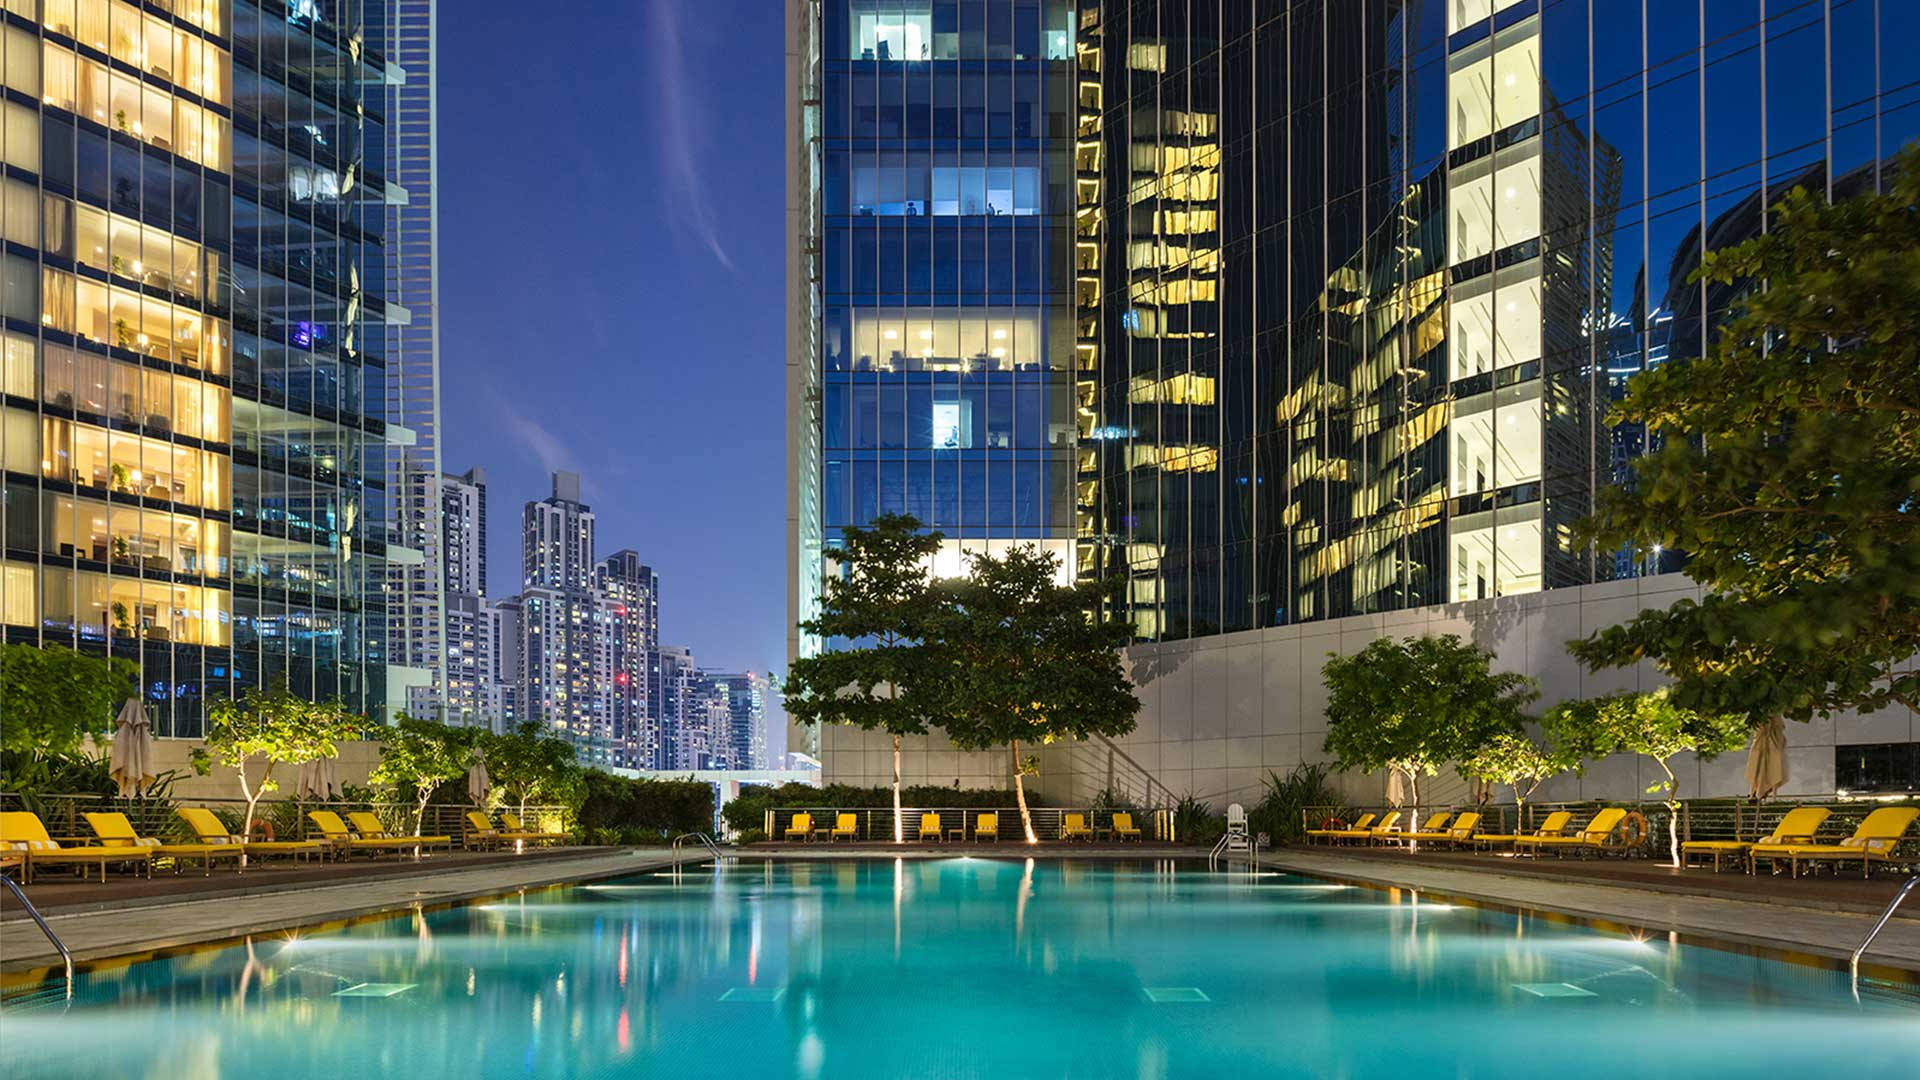 Pool In Downtown Dubai At Night Wallpaper